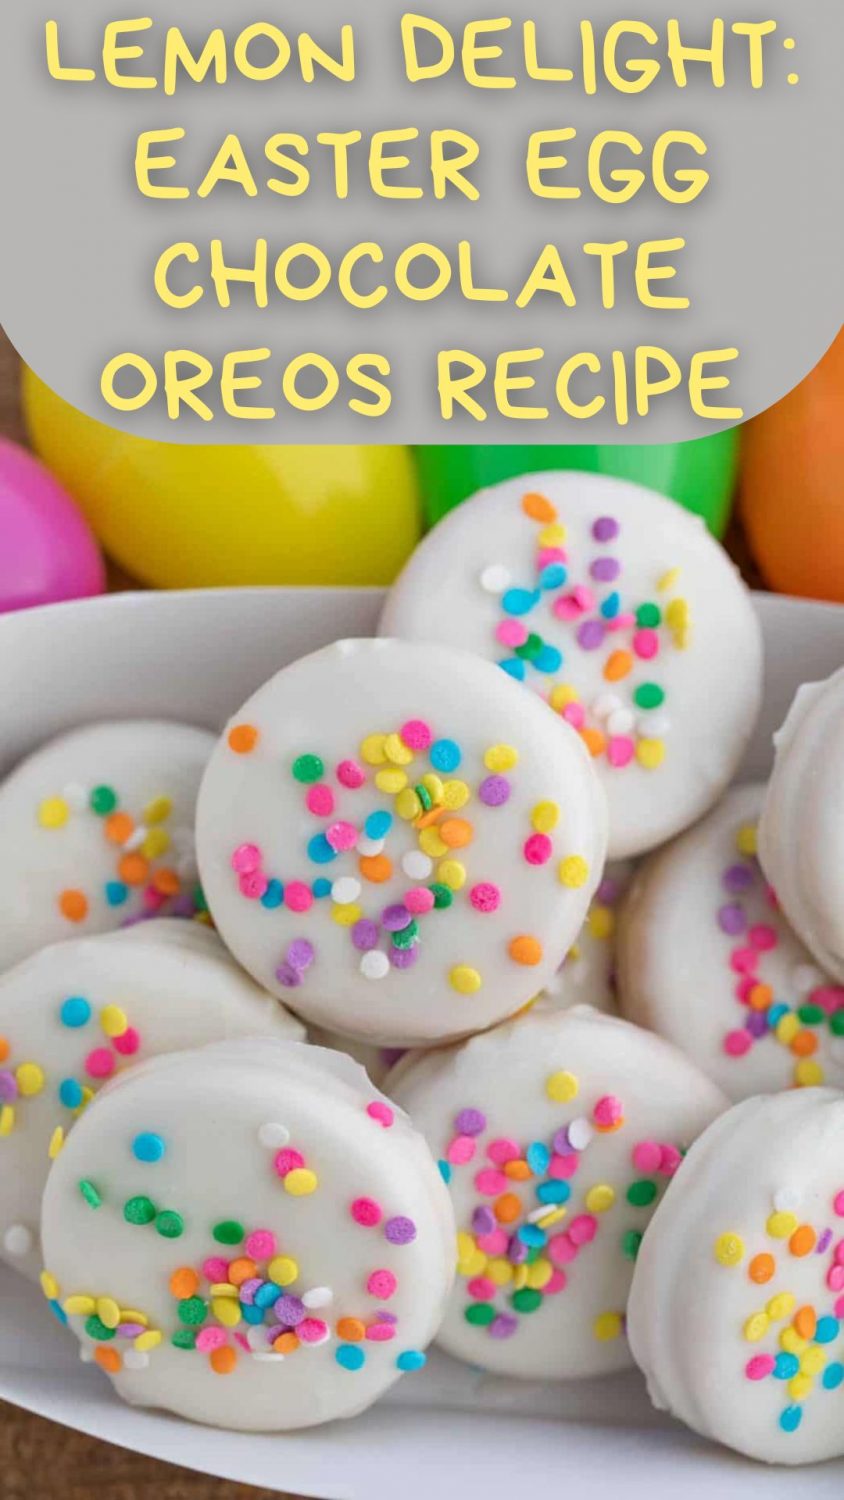 Lemon Delight: Easter Egg Chocolate Oreos Recipe